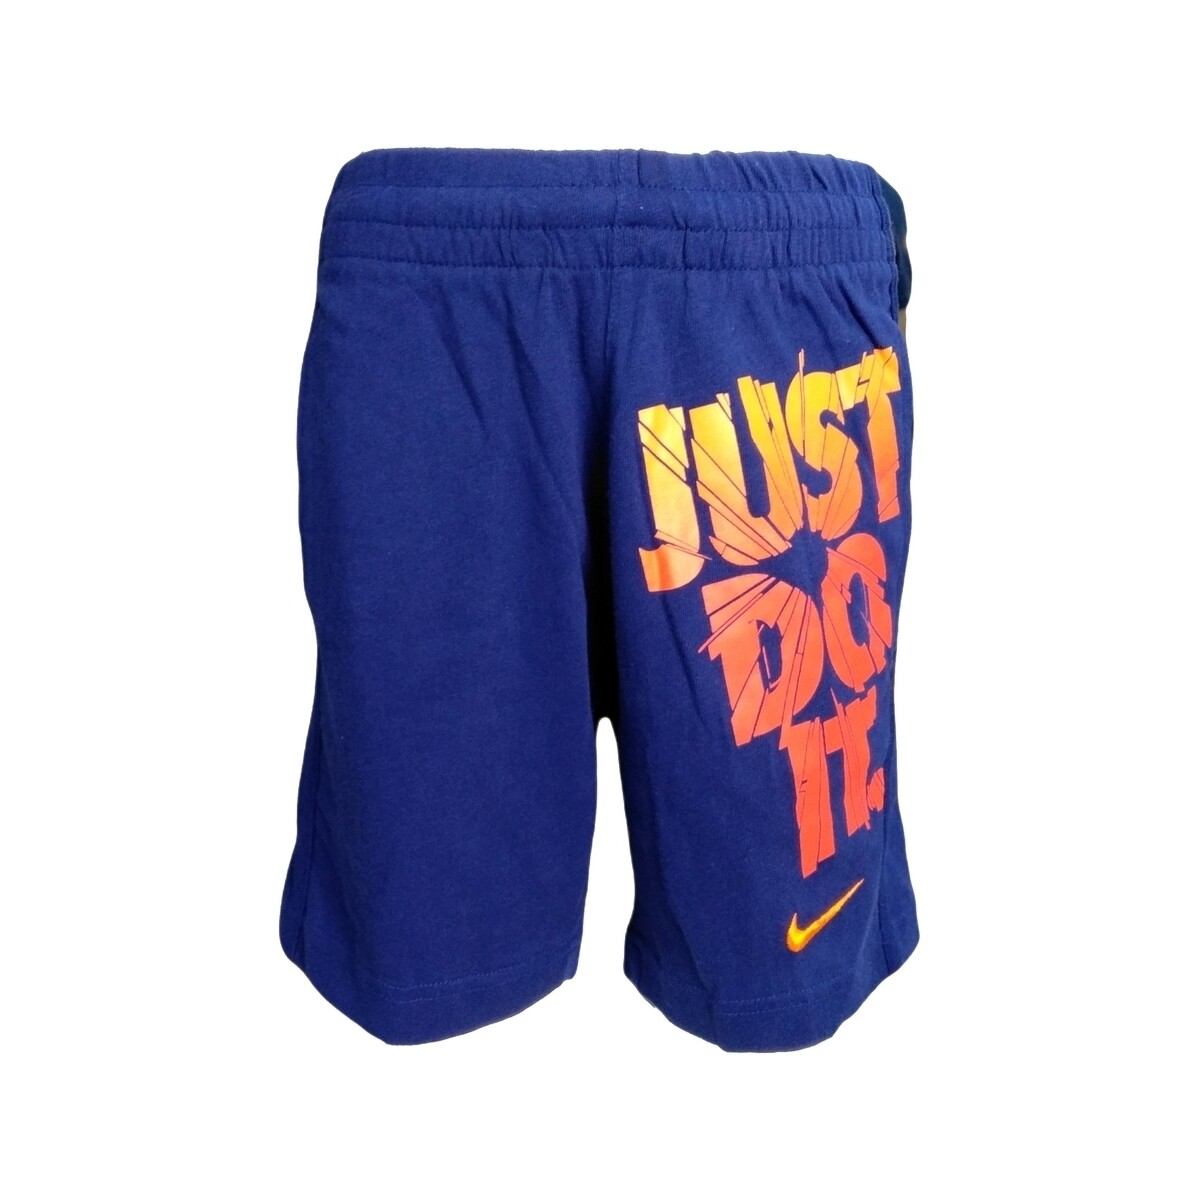 Kleidung Jungen Shorts / Bermudas Nike 485279 Blau